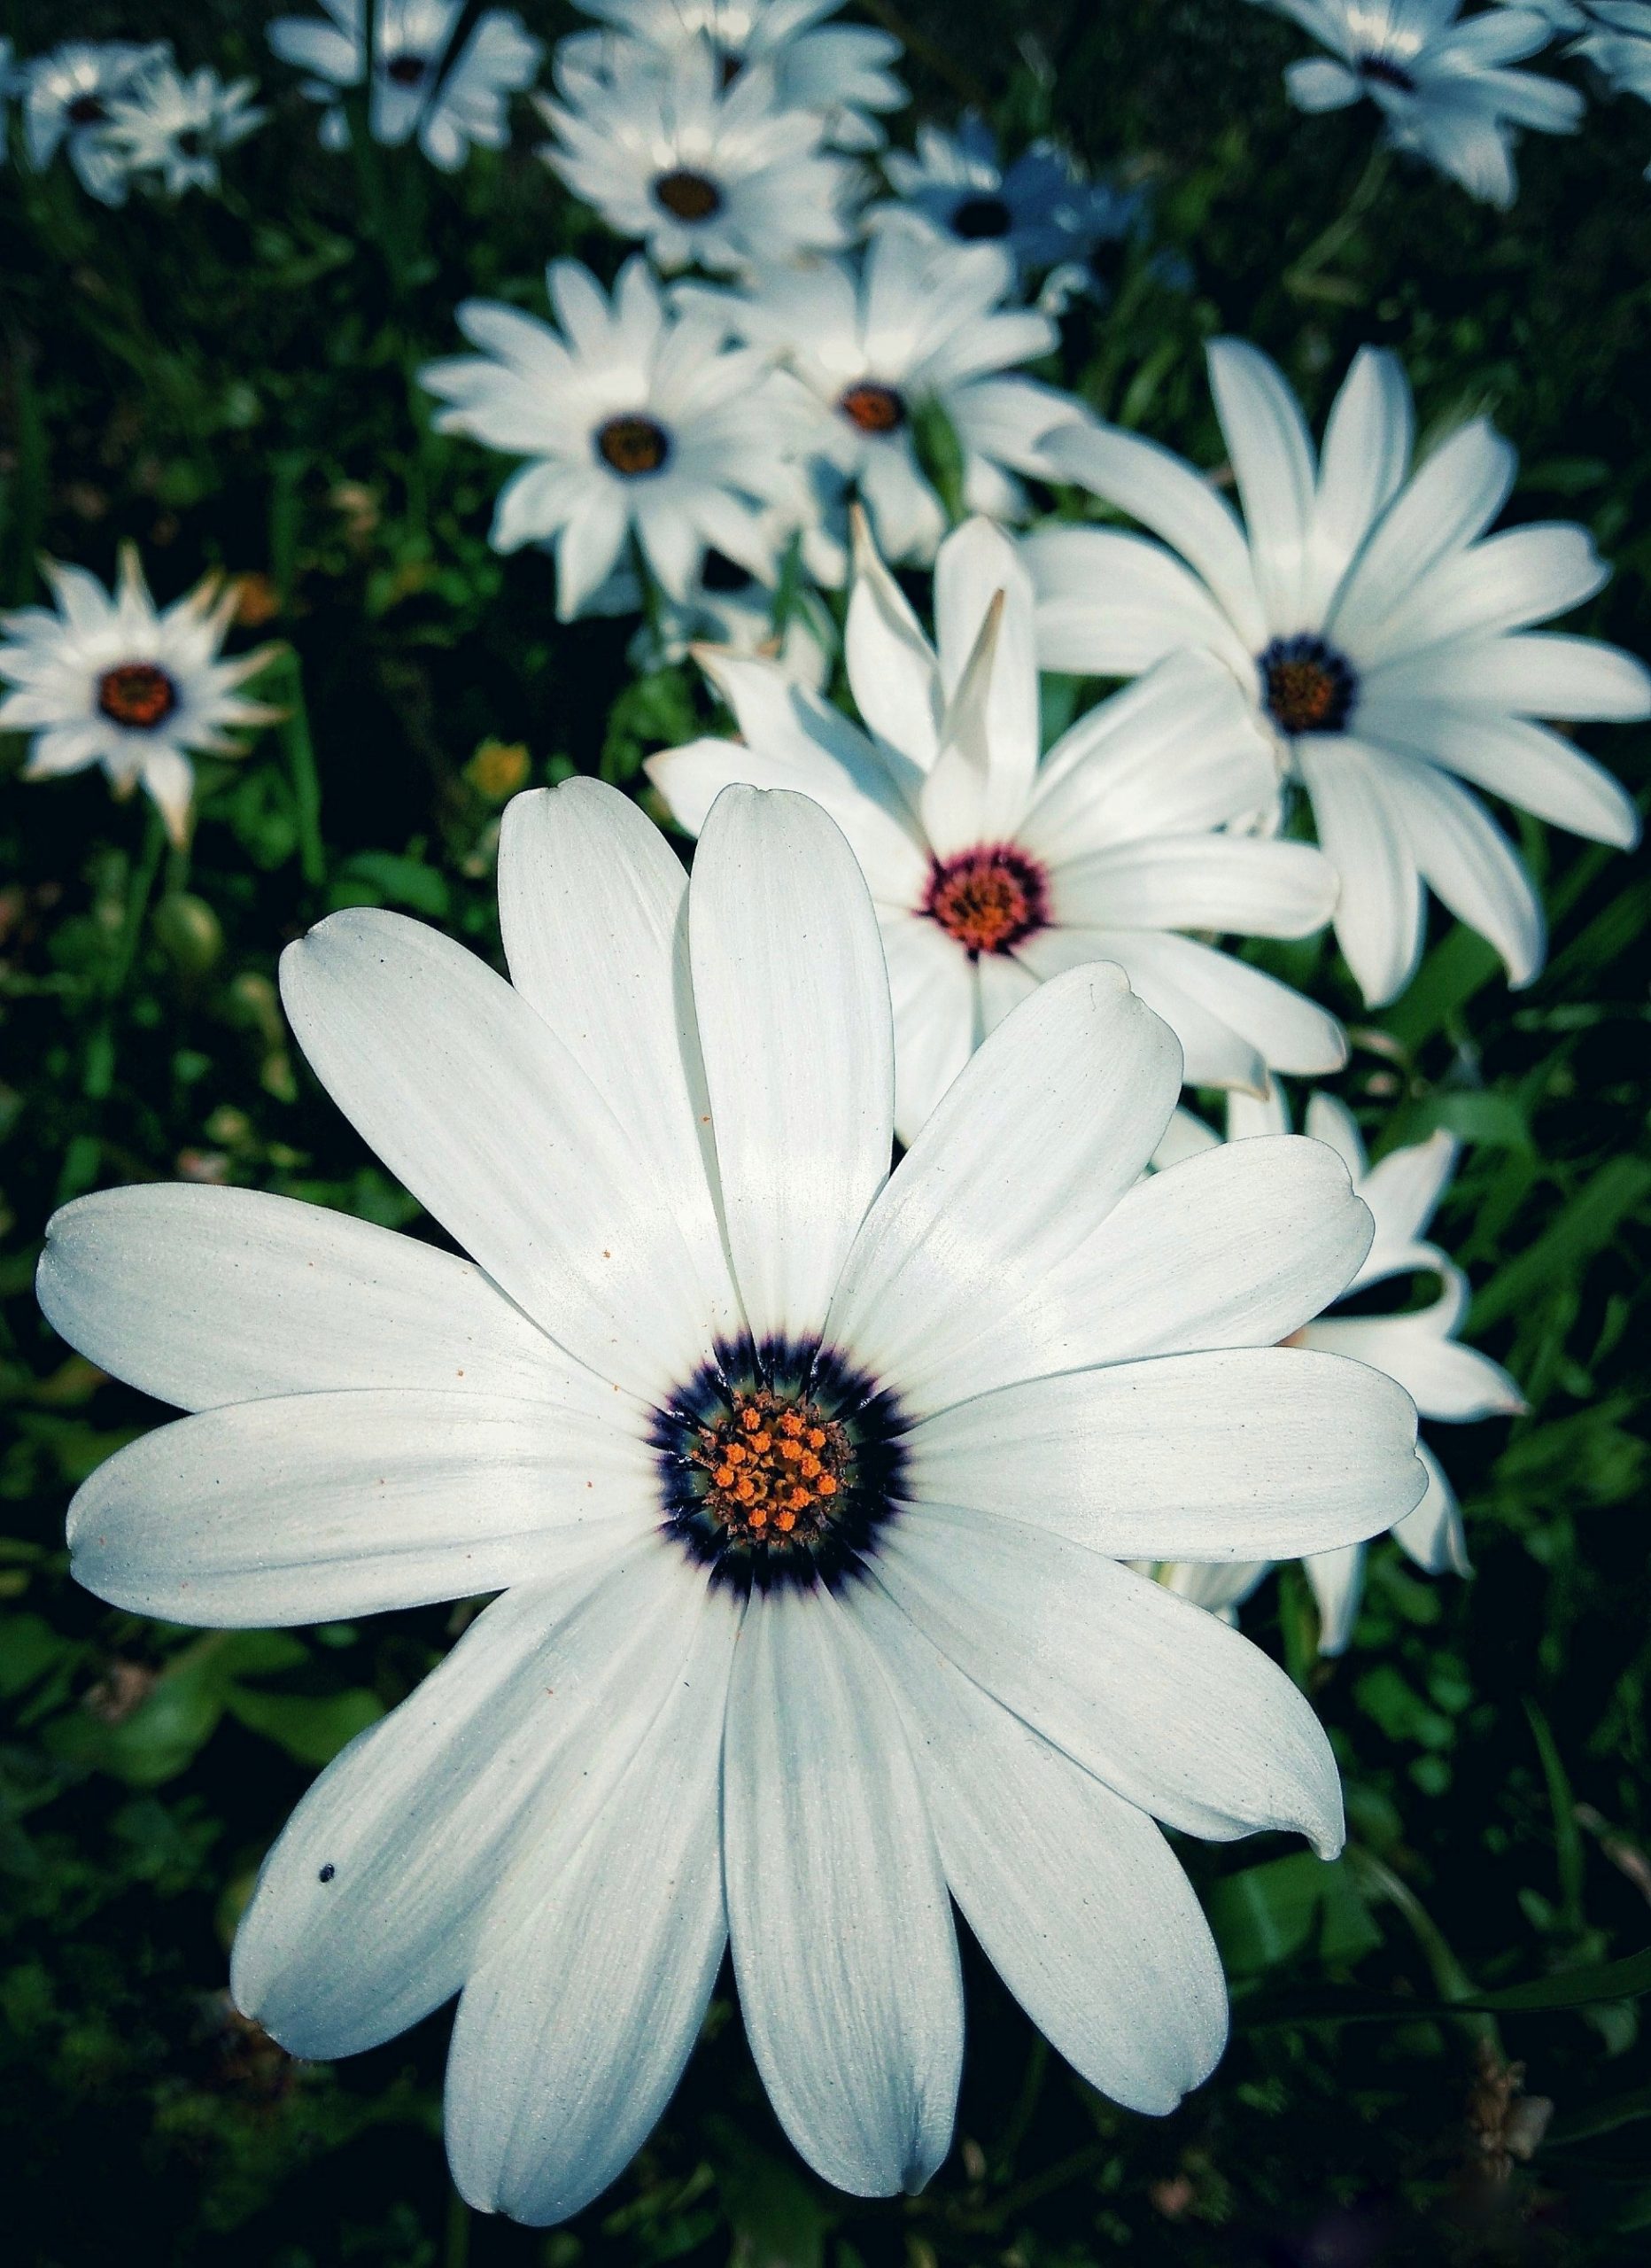 White flowers in a garden